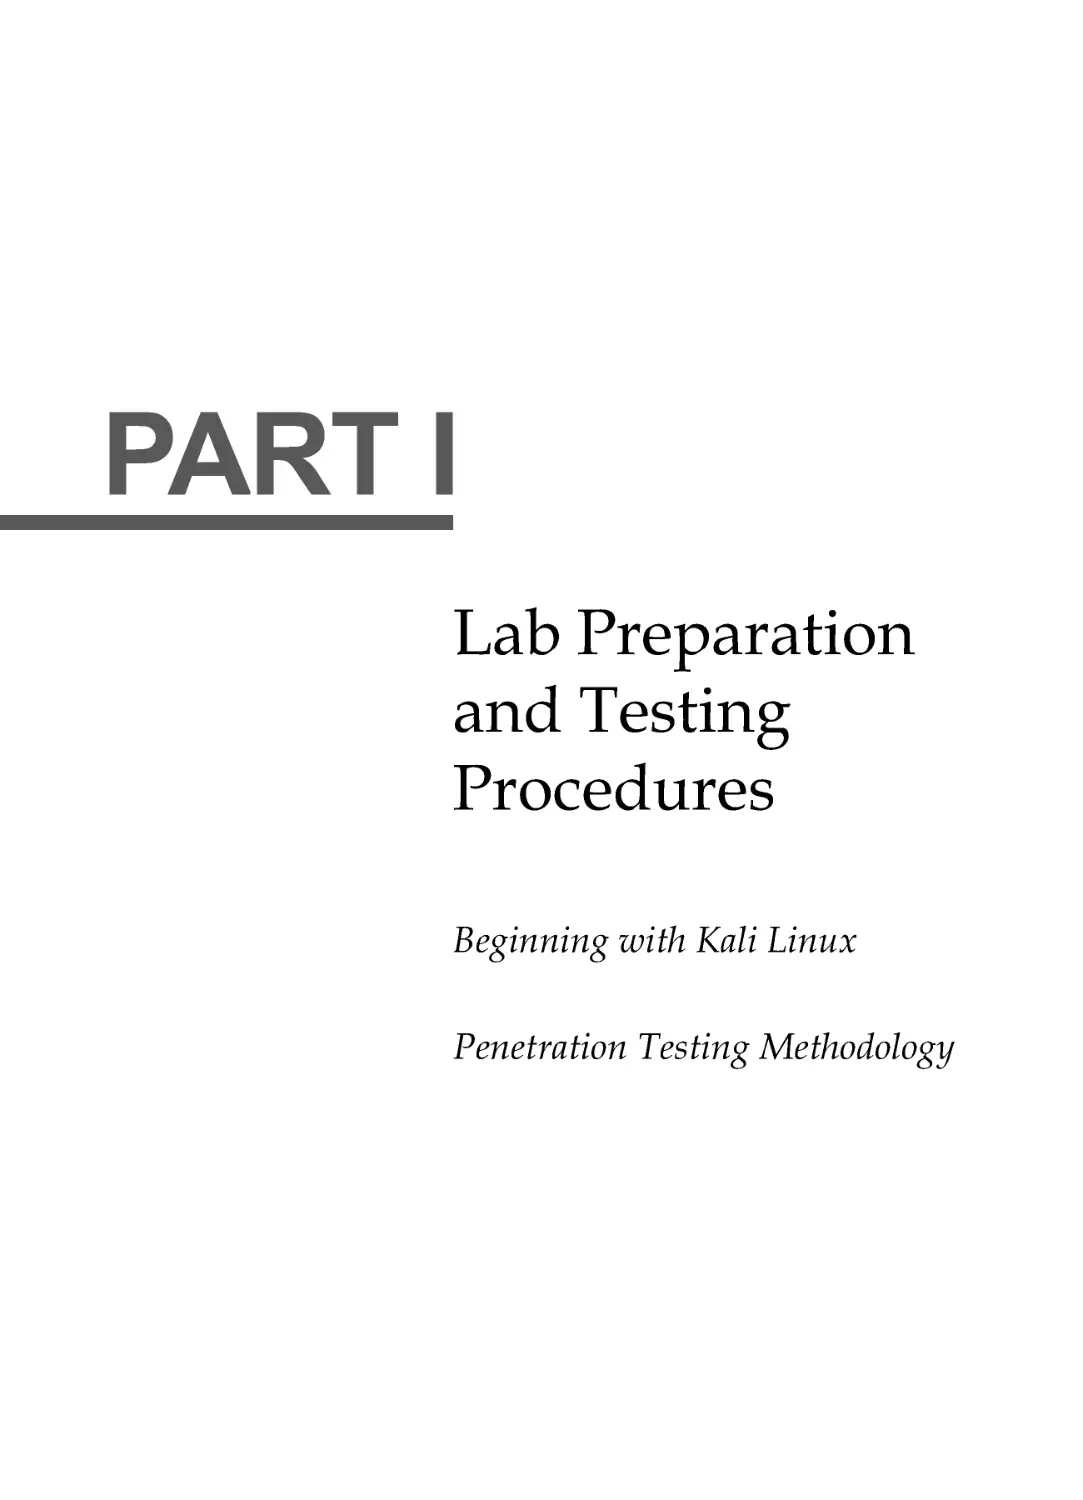 Part I: Lab Preparation and Testing Procedures